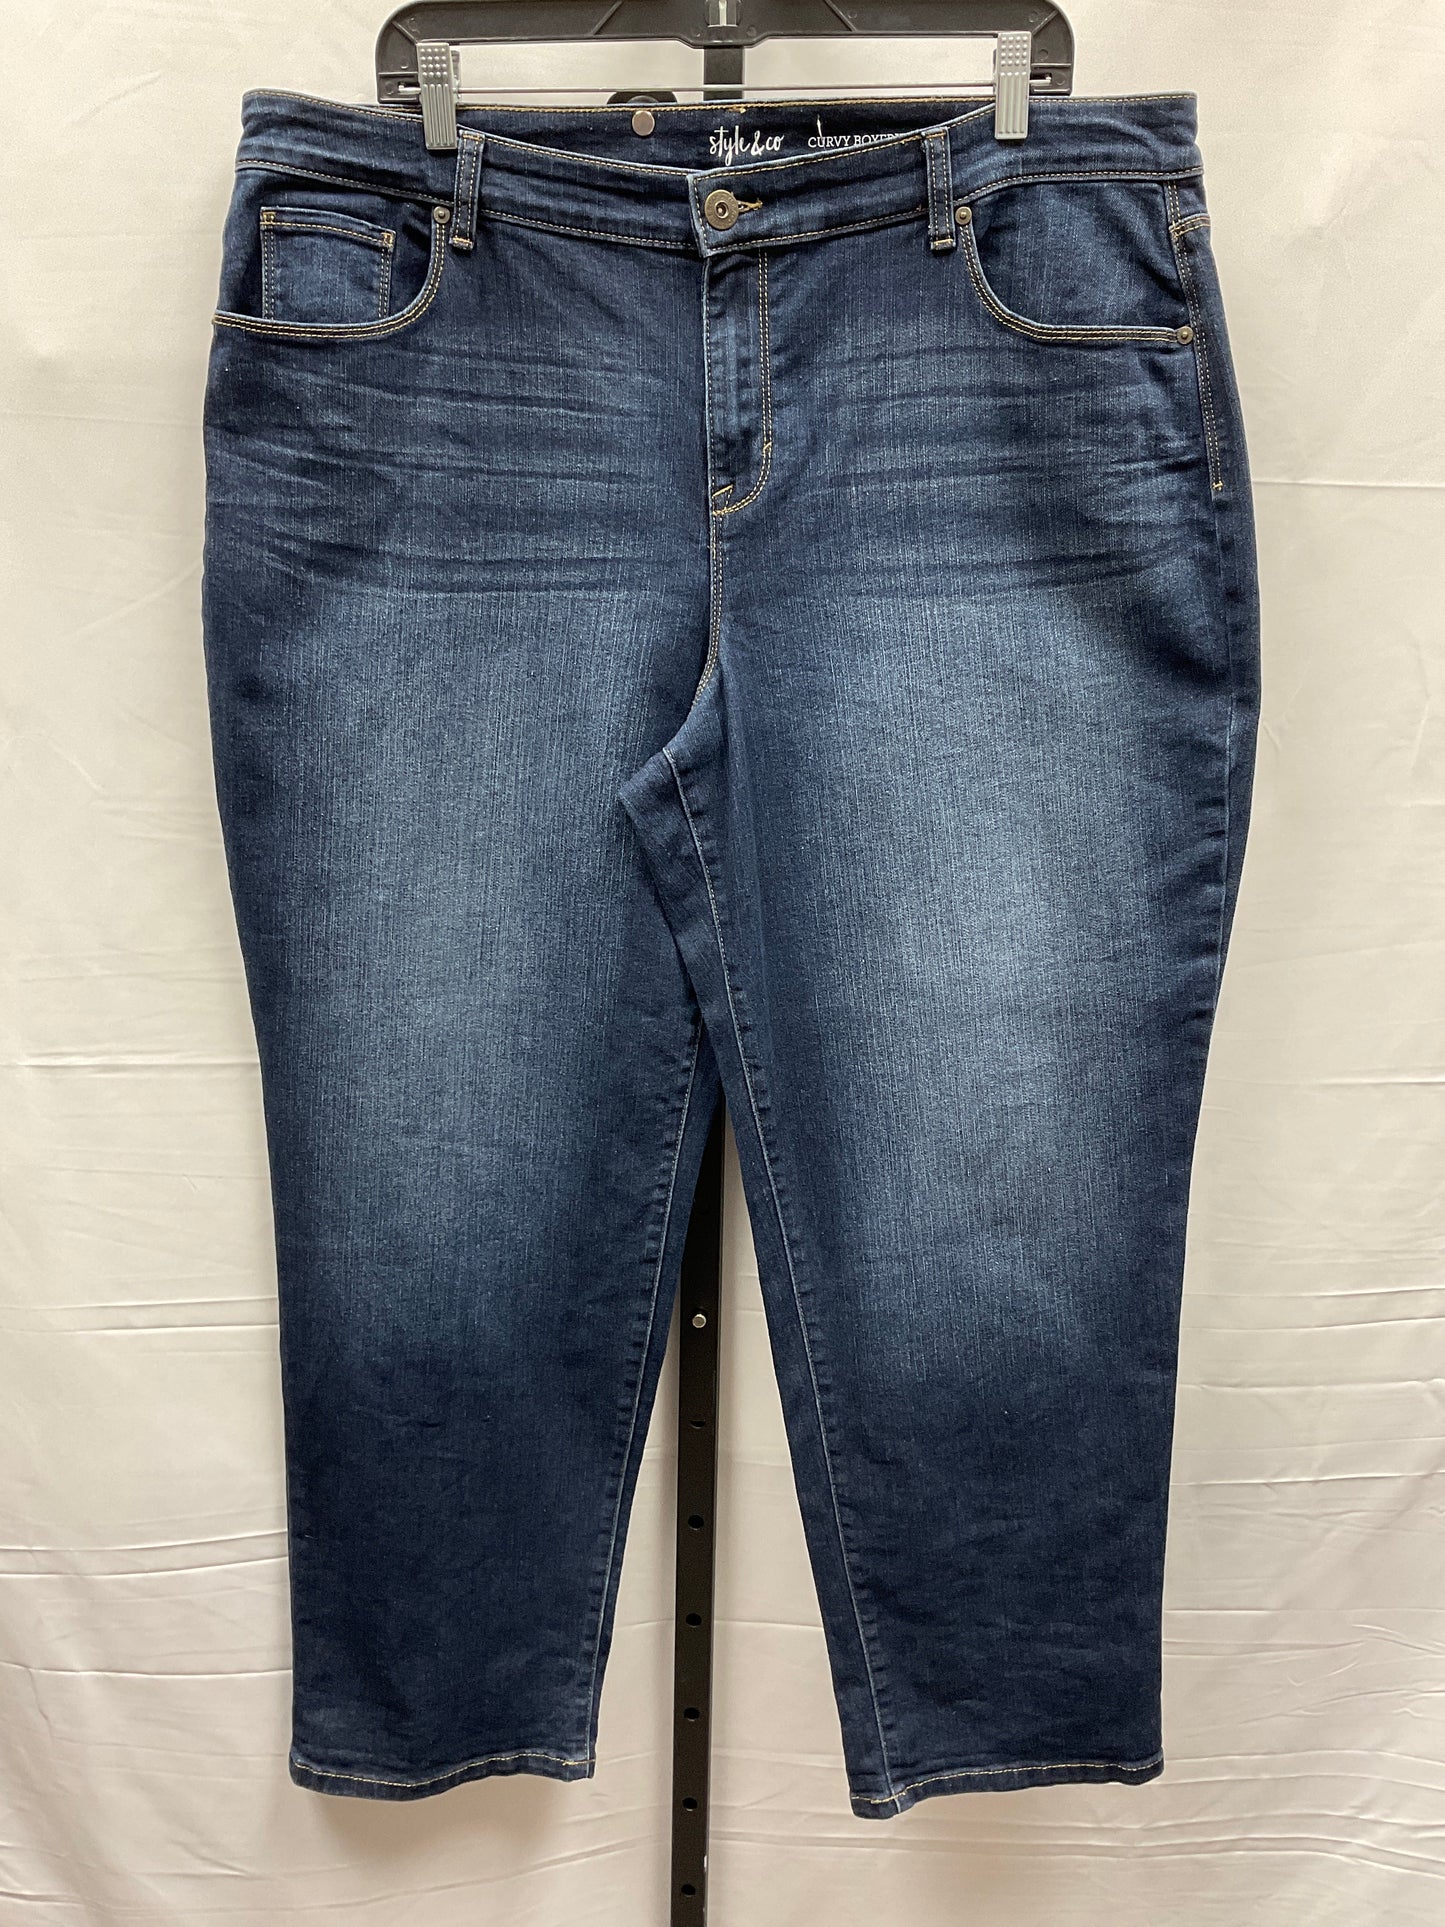 Blue Denim Jeans Boyfriend Style And Company, Size 18